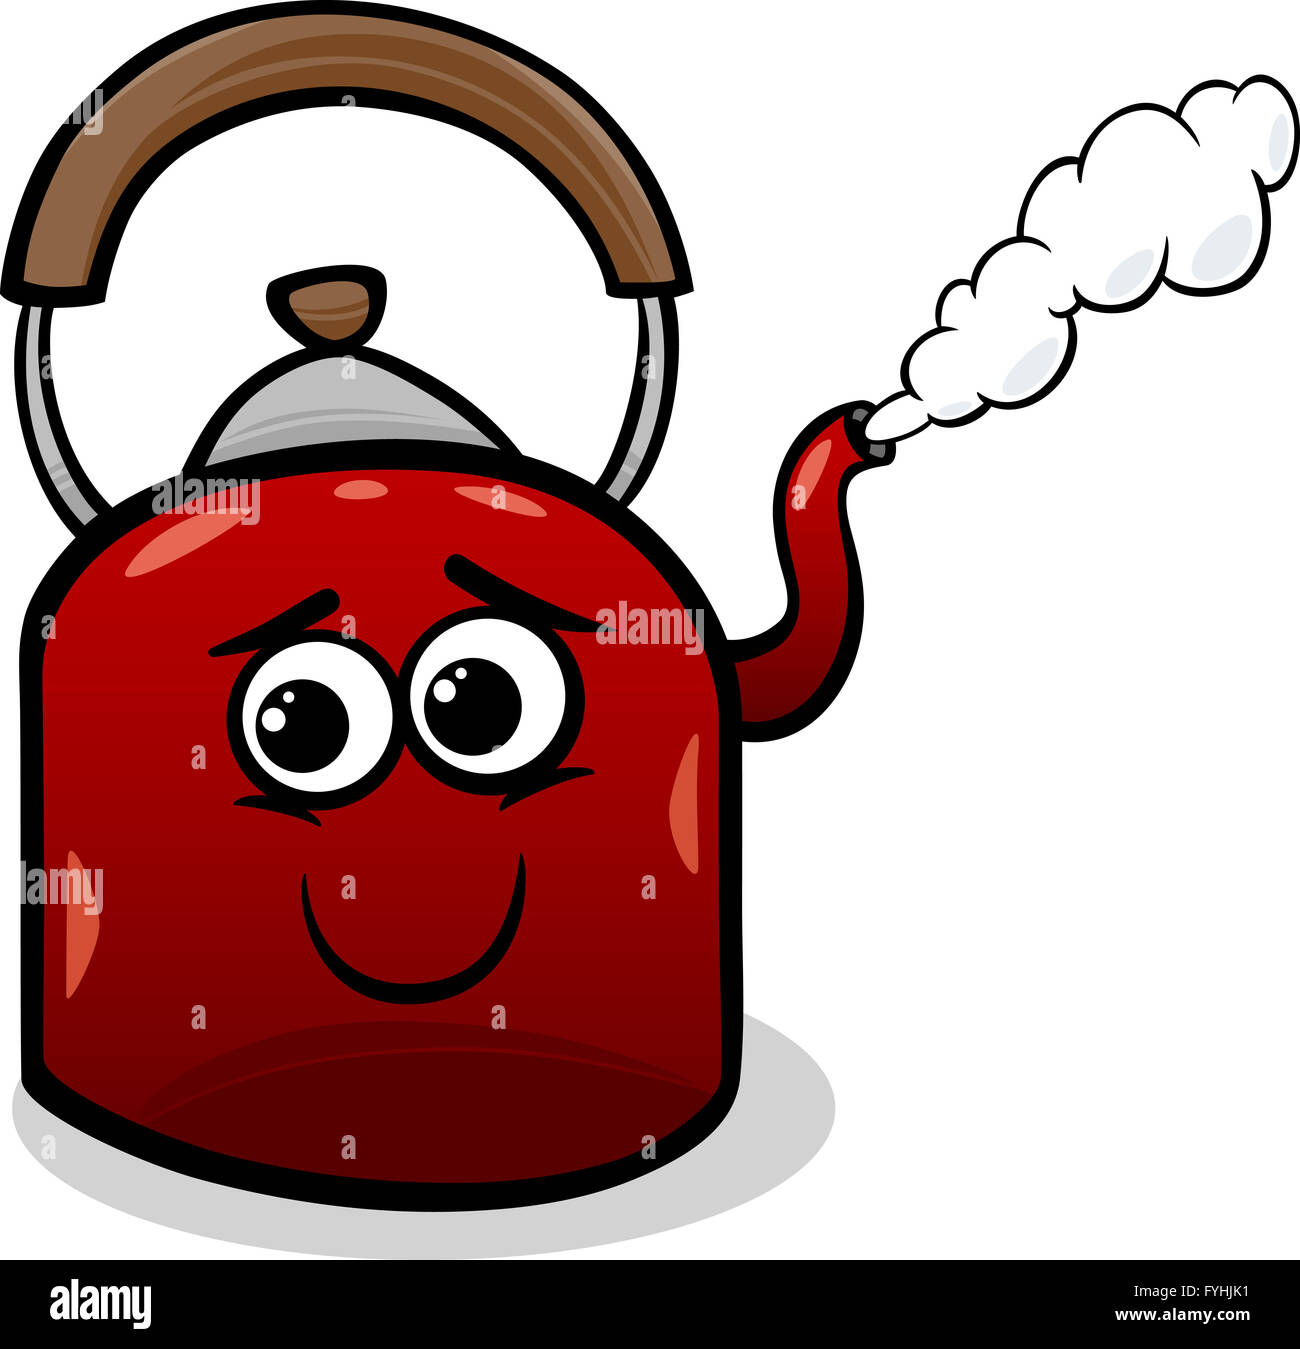 https://c8.alamy.com/comp/FYHJK1/kettle-and-steam-cartoon-illustration-FYHJK1.jpg